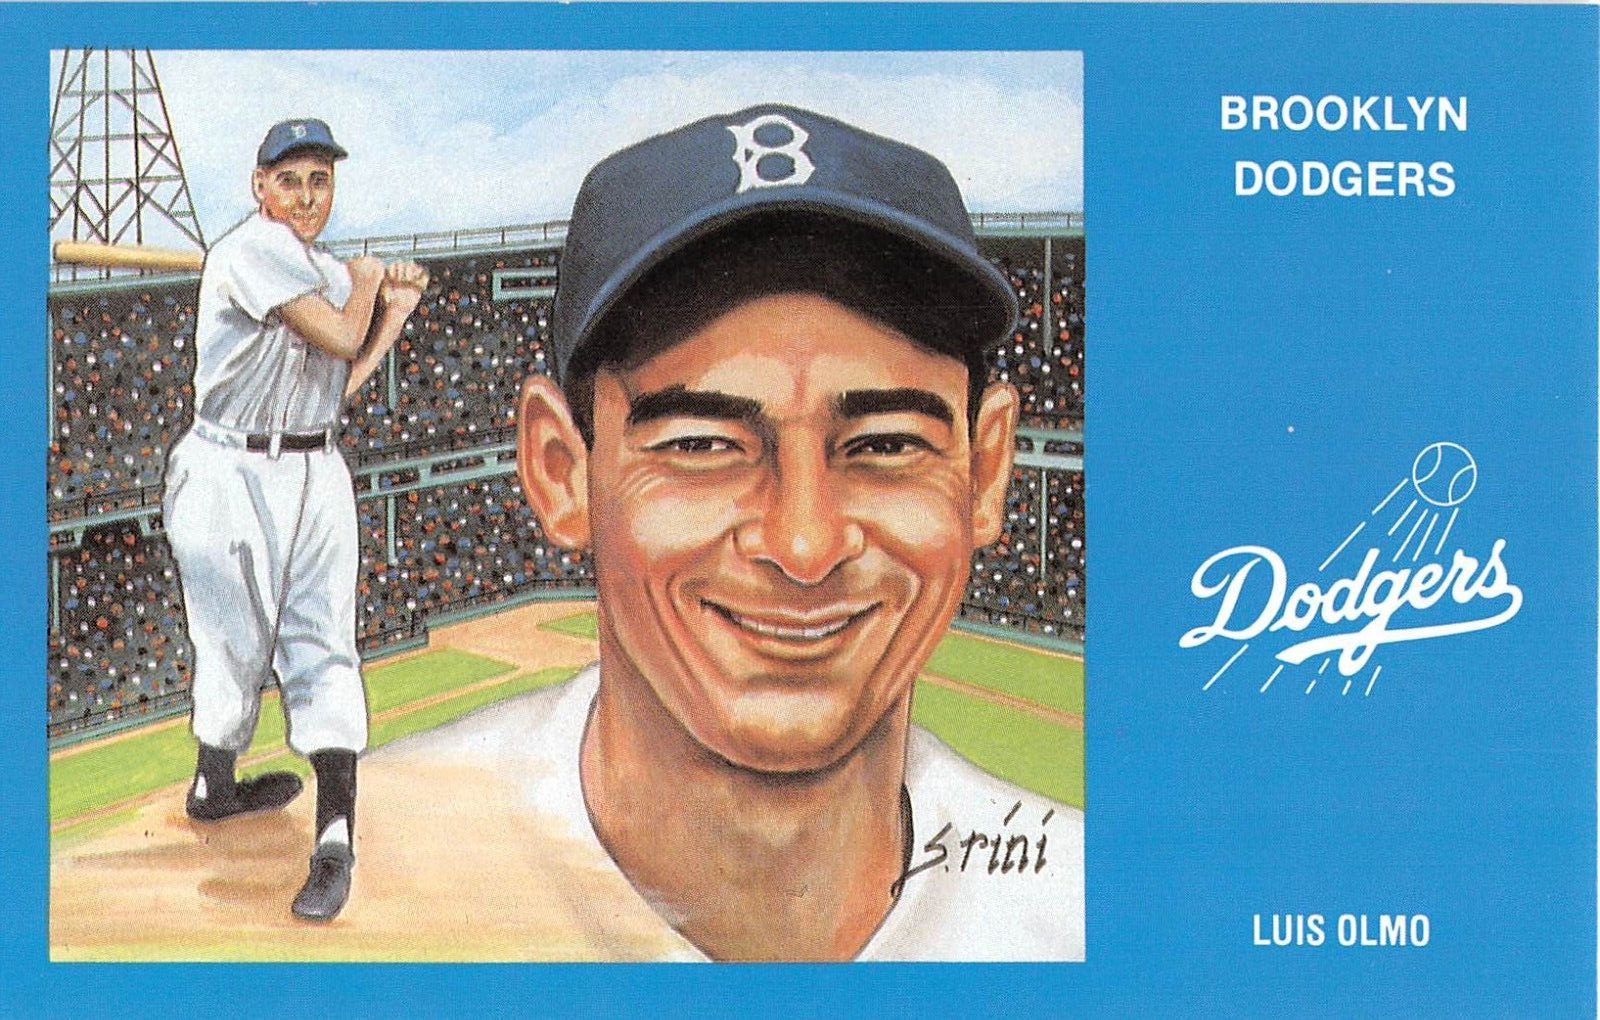 1991 Luis Olmo Brooklyn Dodgers post card Baseball